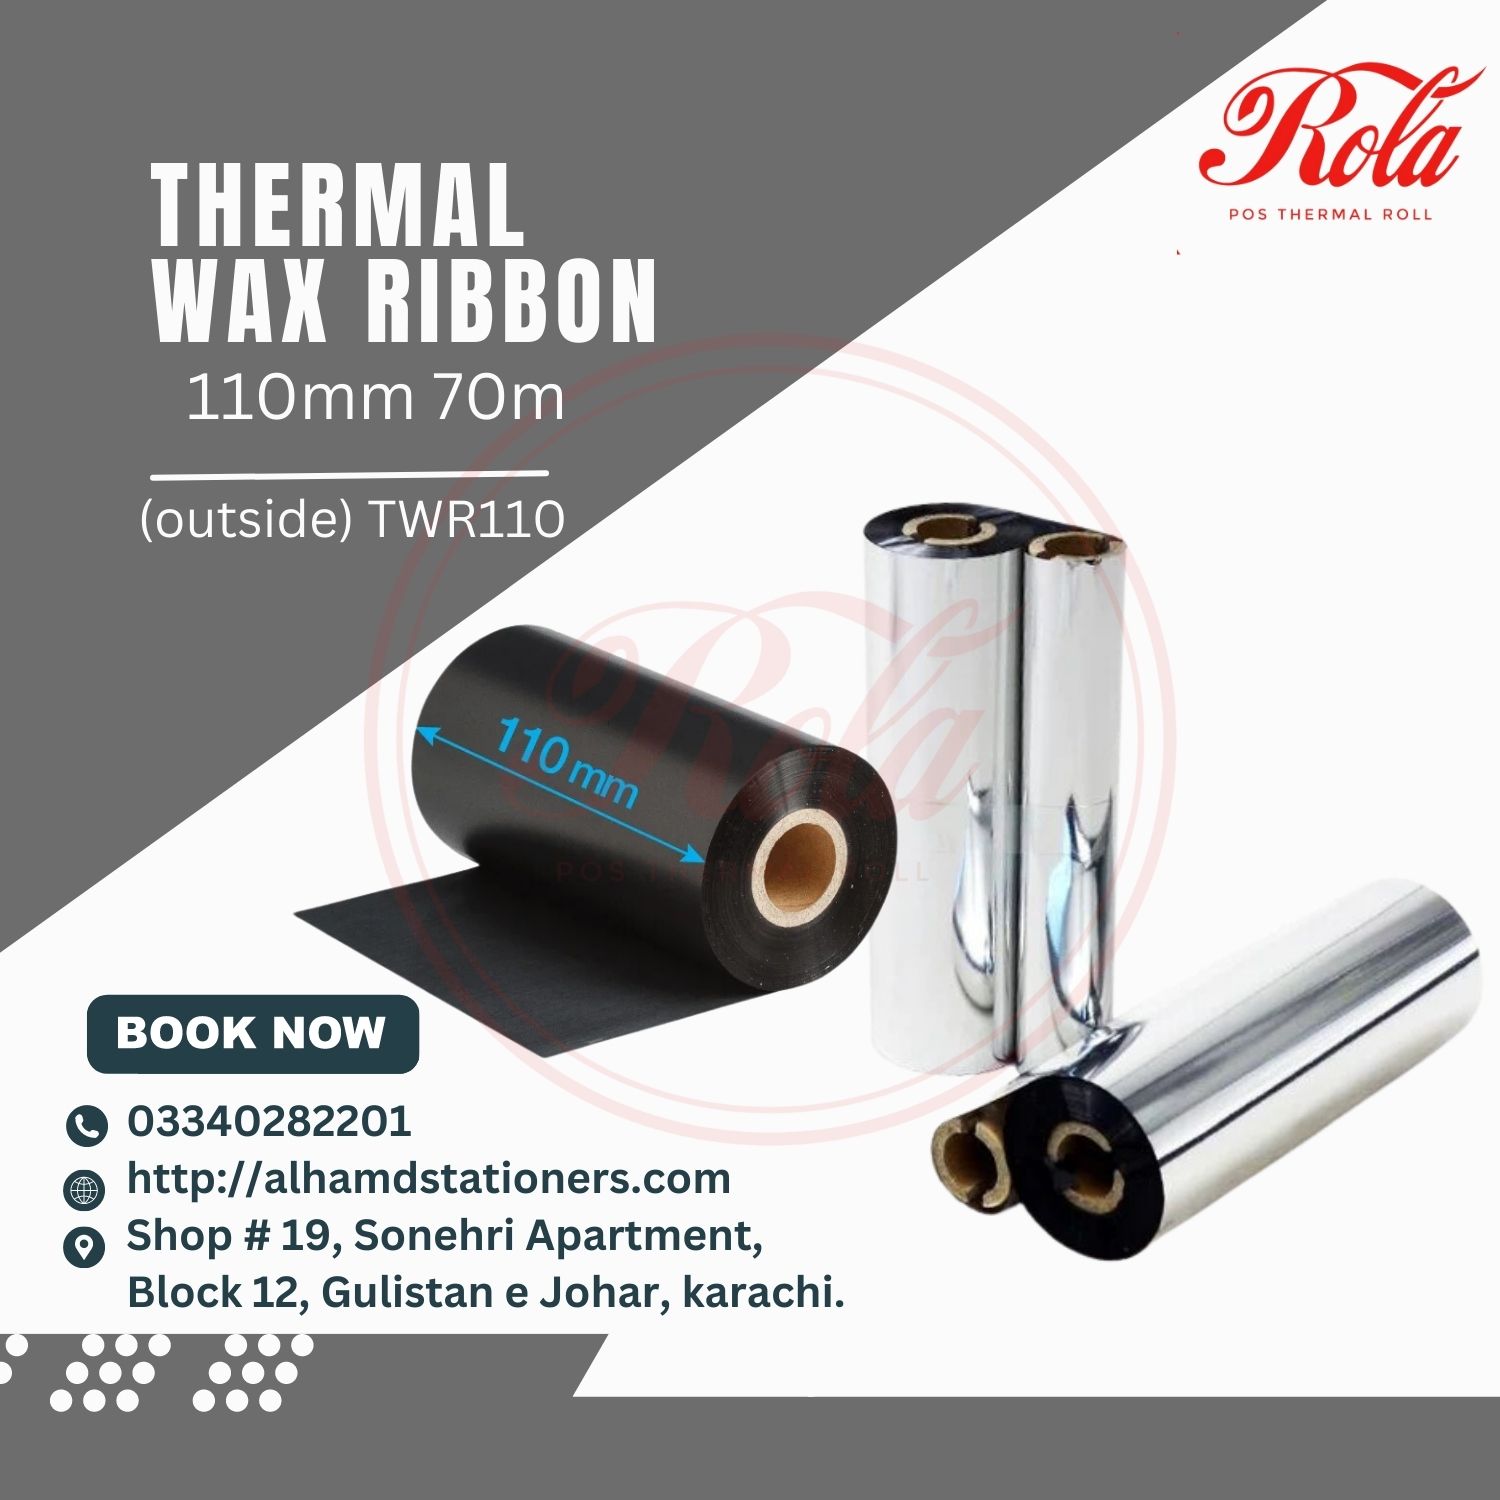 Rola - Thermal Wax Ribbon 110mm 70m (outside) TWR110